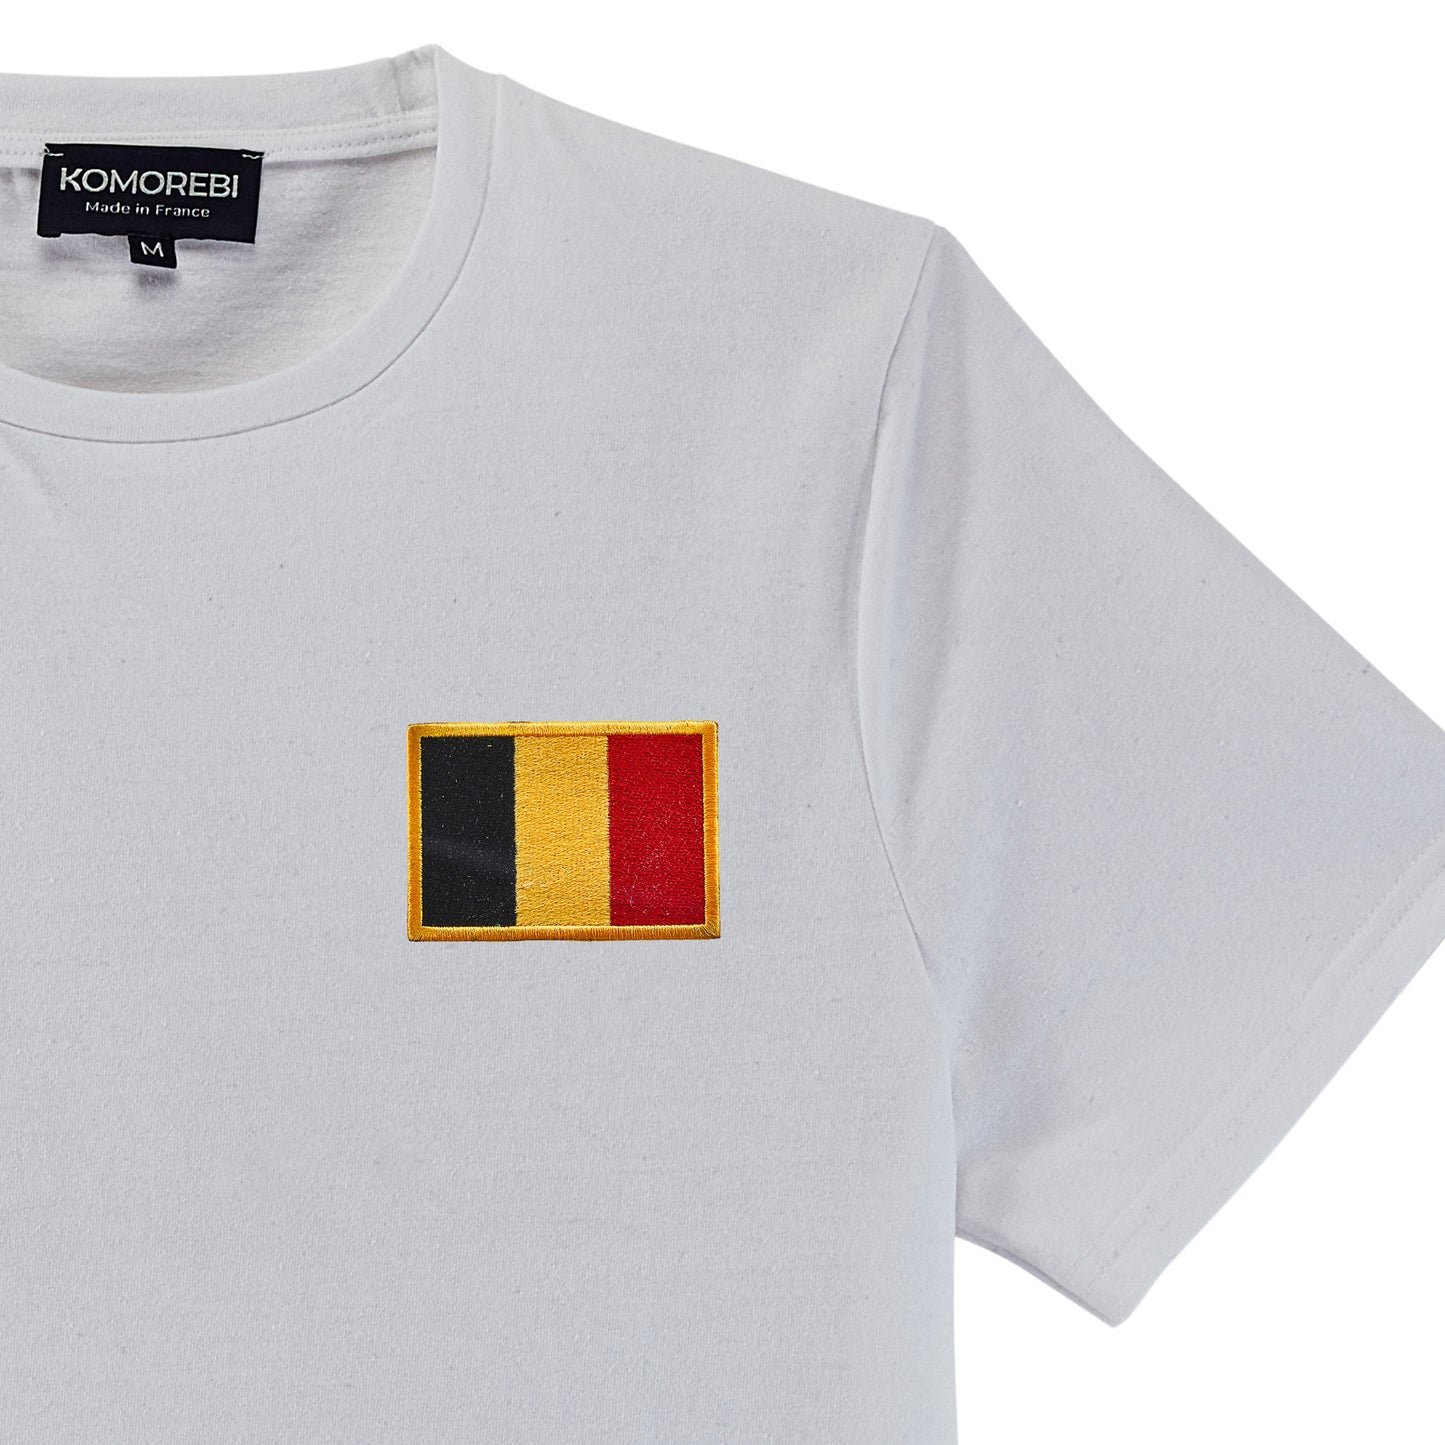 Belgique • T-shirt